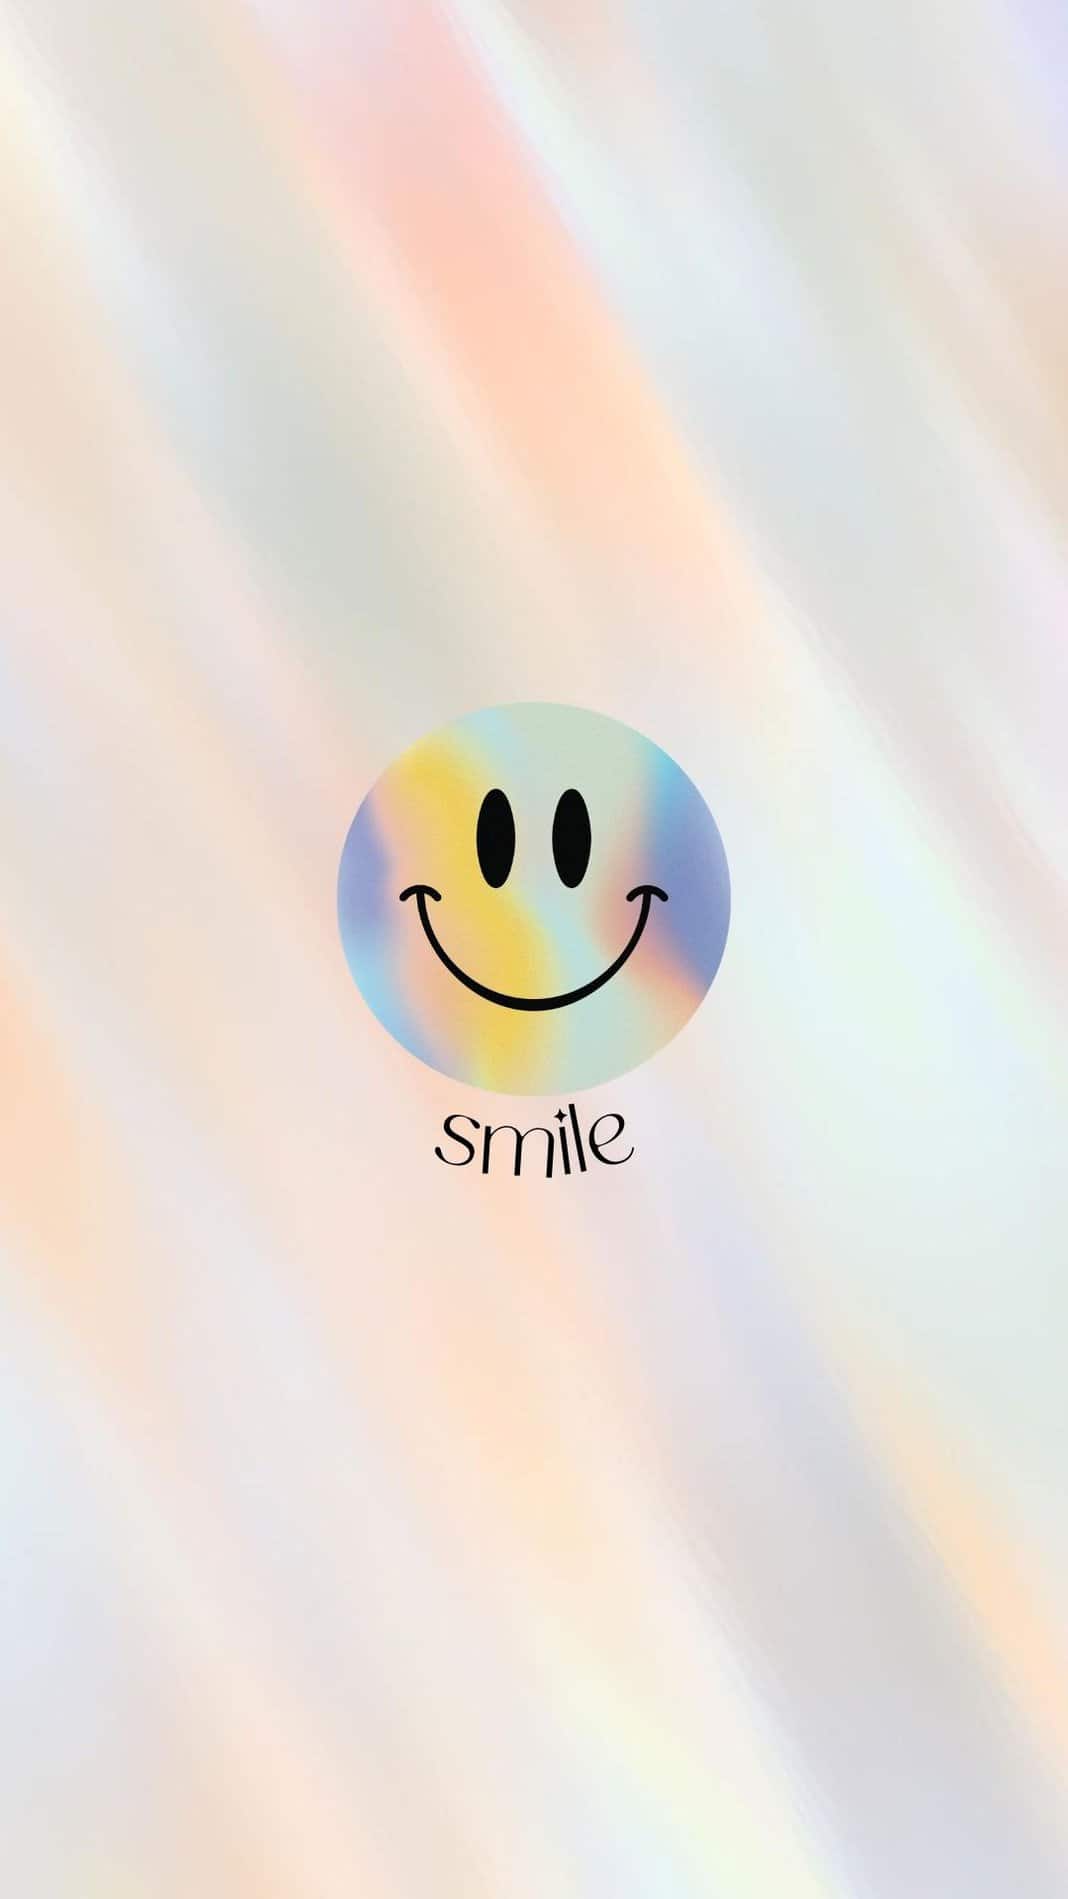 Smile iPhone Wallpaper